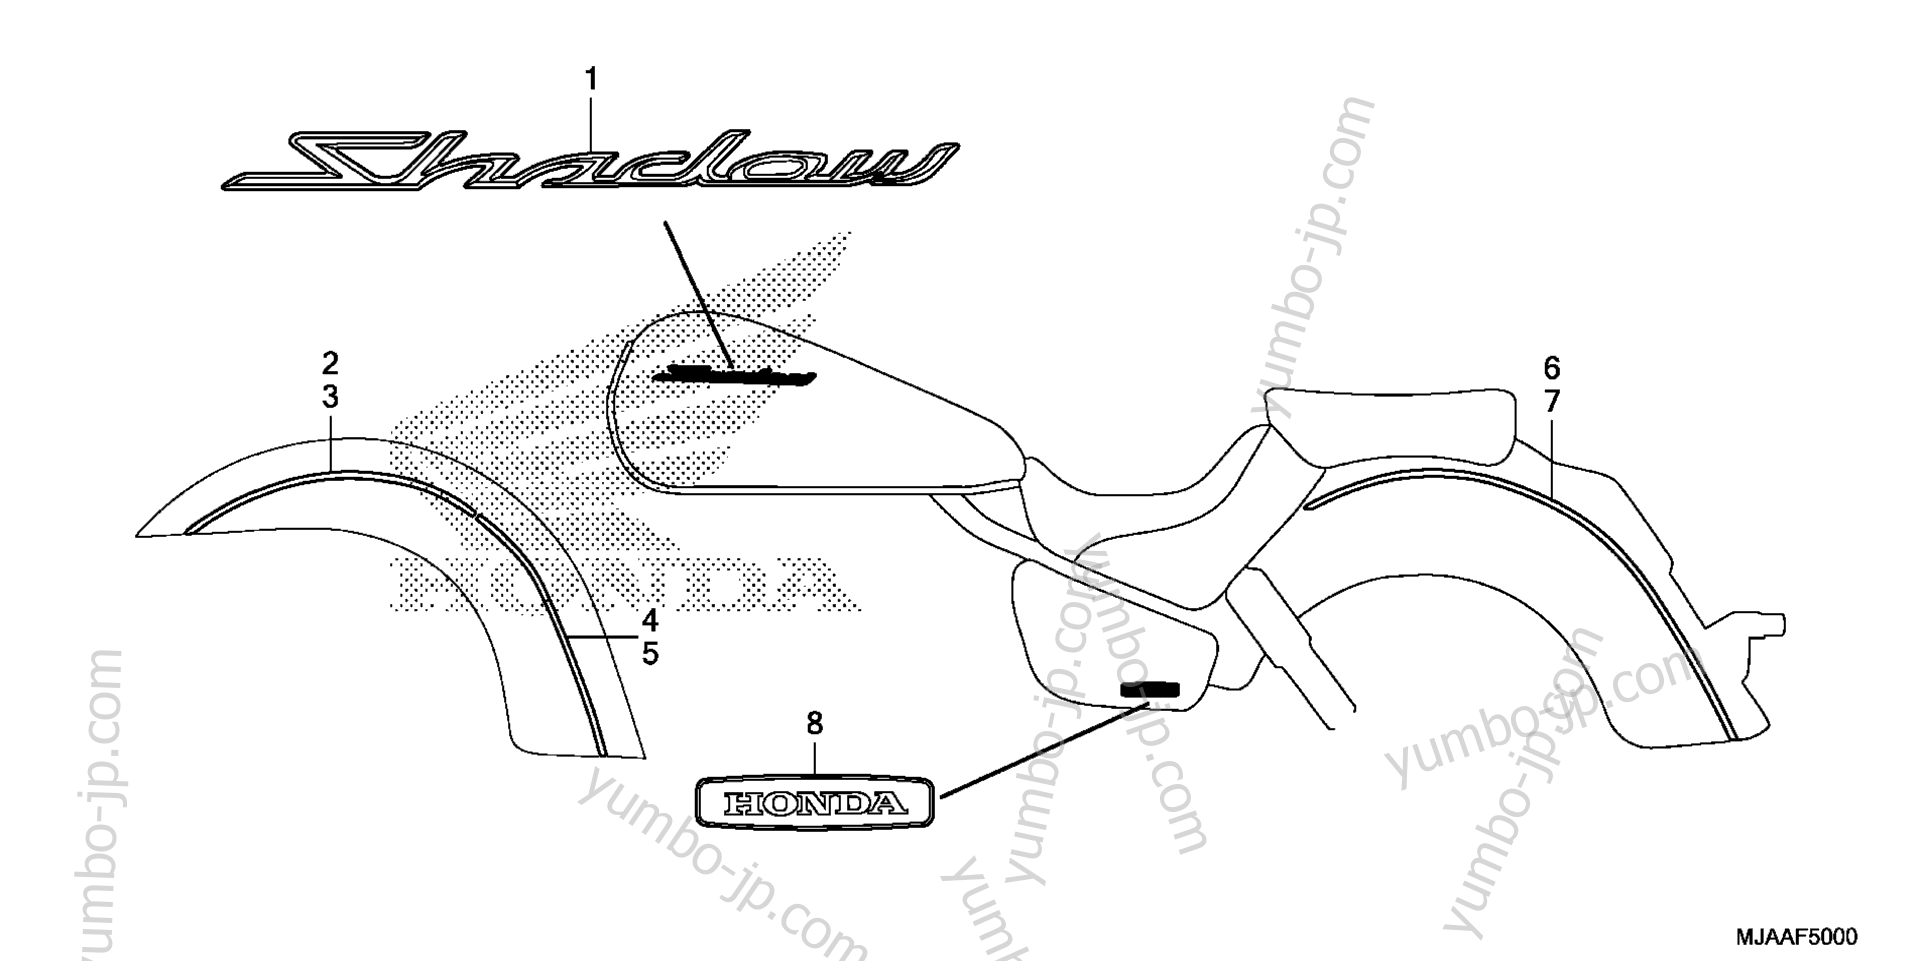 EMBLEM (1) for motorcycles HONDA VT750C AC 2013 year